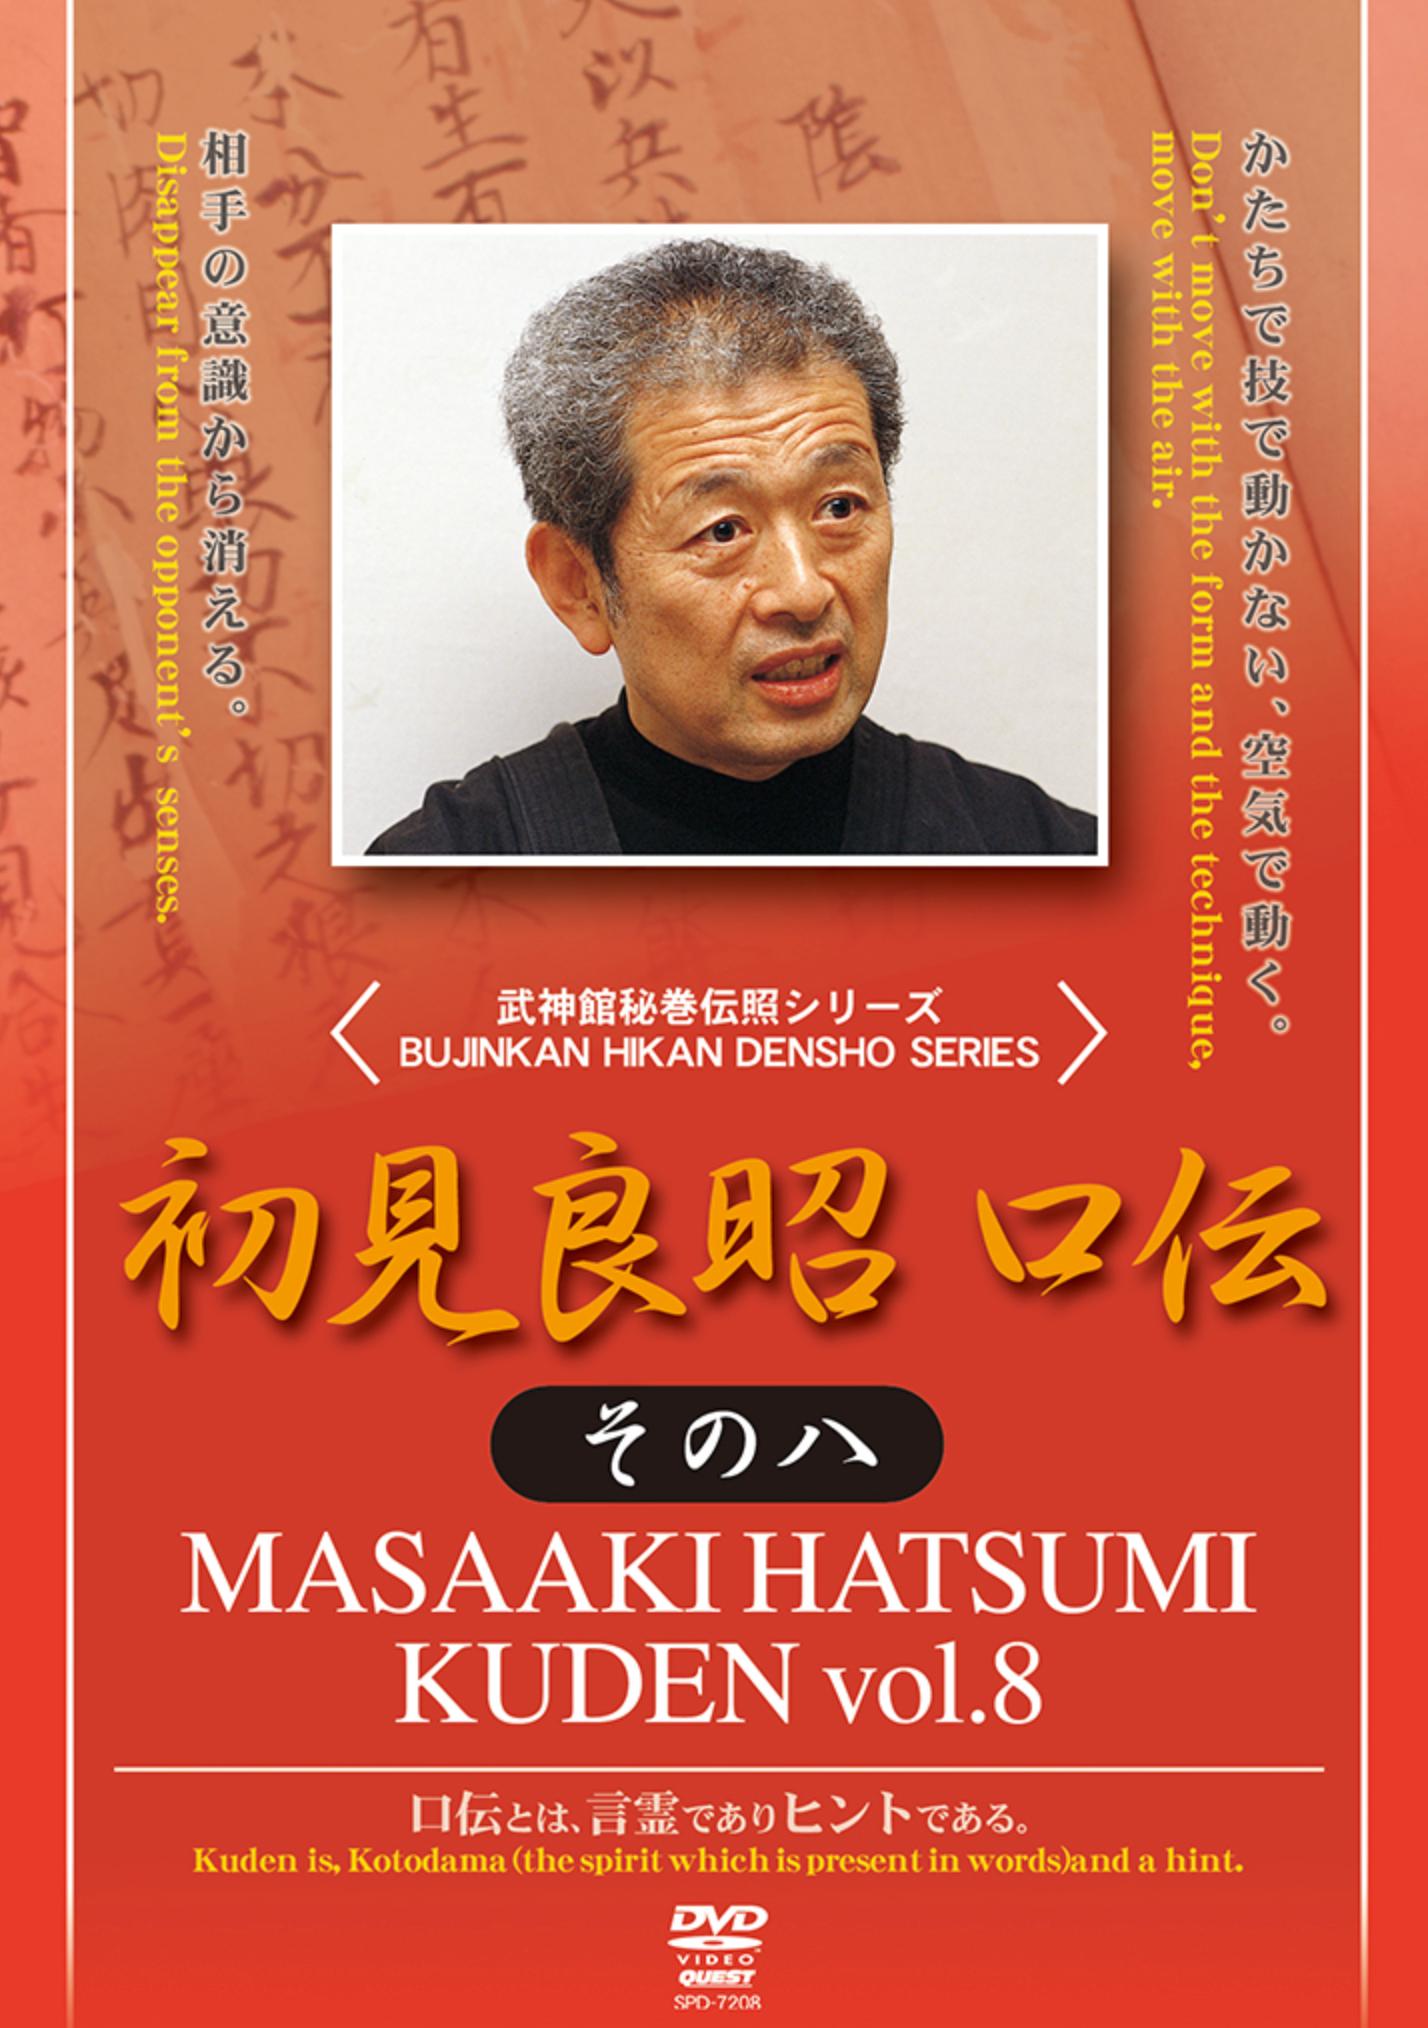 Kuden Vol 8 DVD with Masaaki Hatsumi - Budovideos Inc